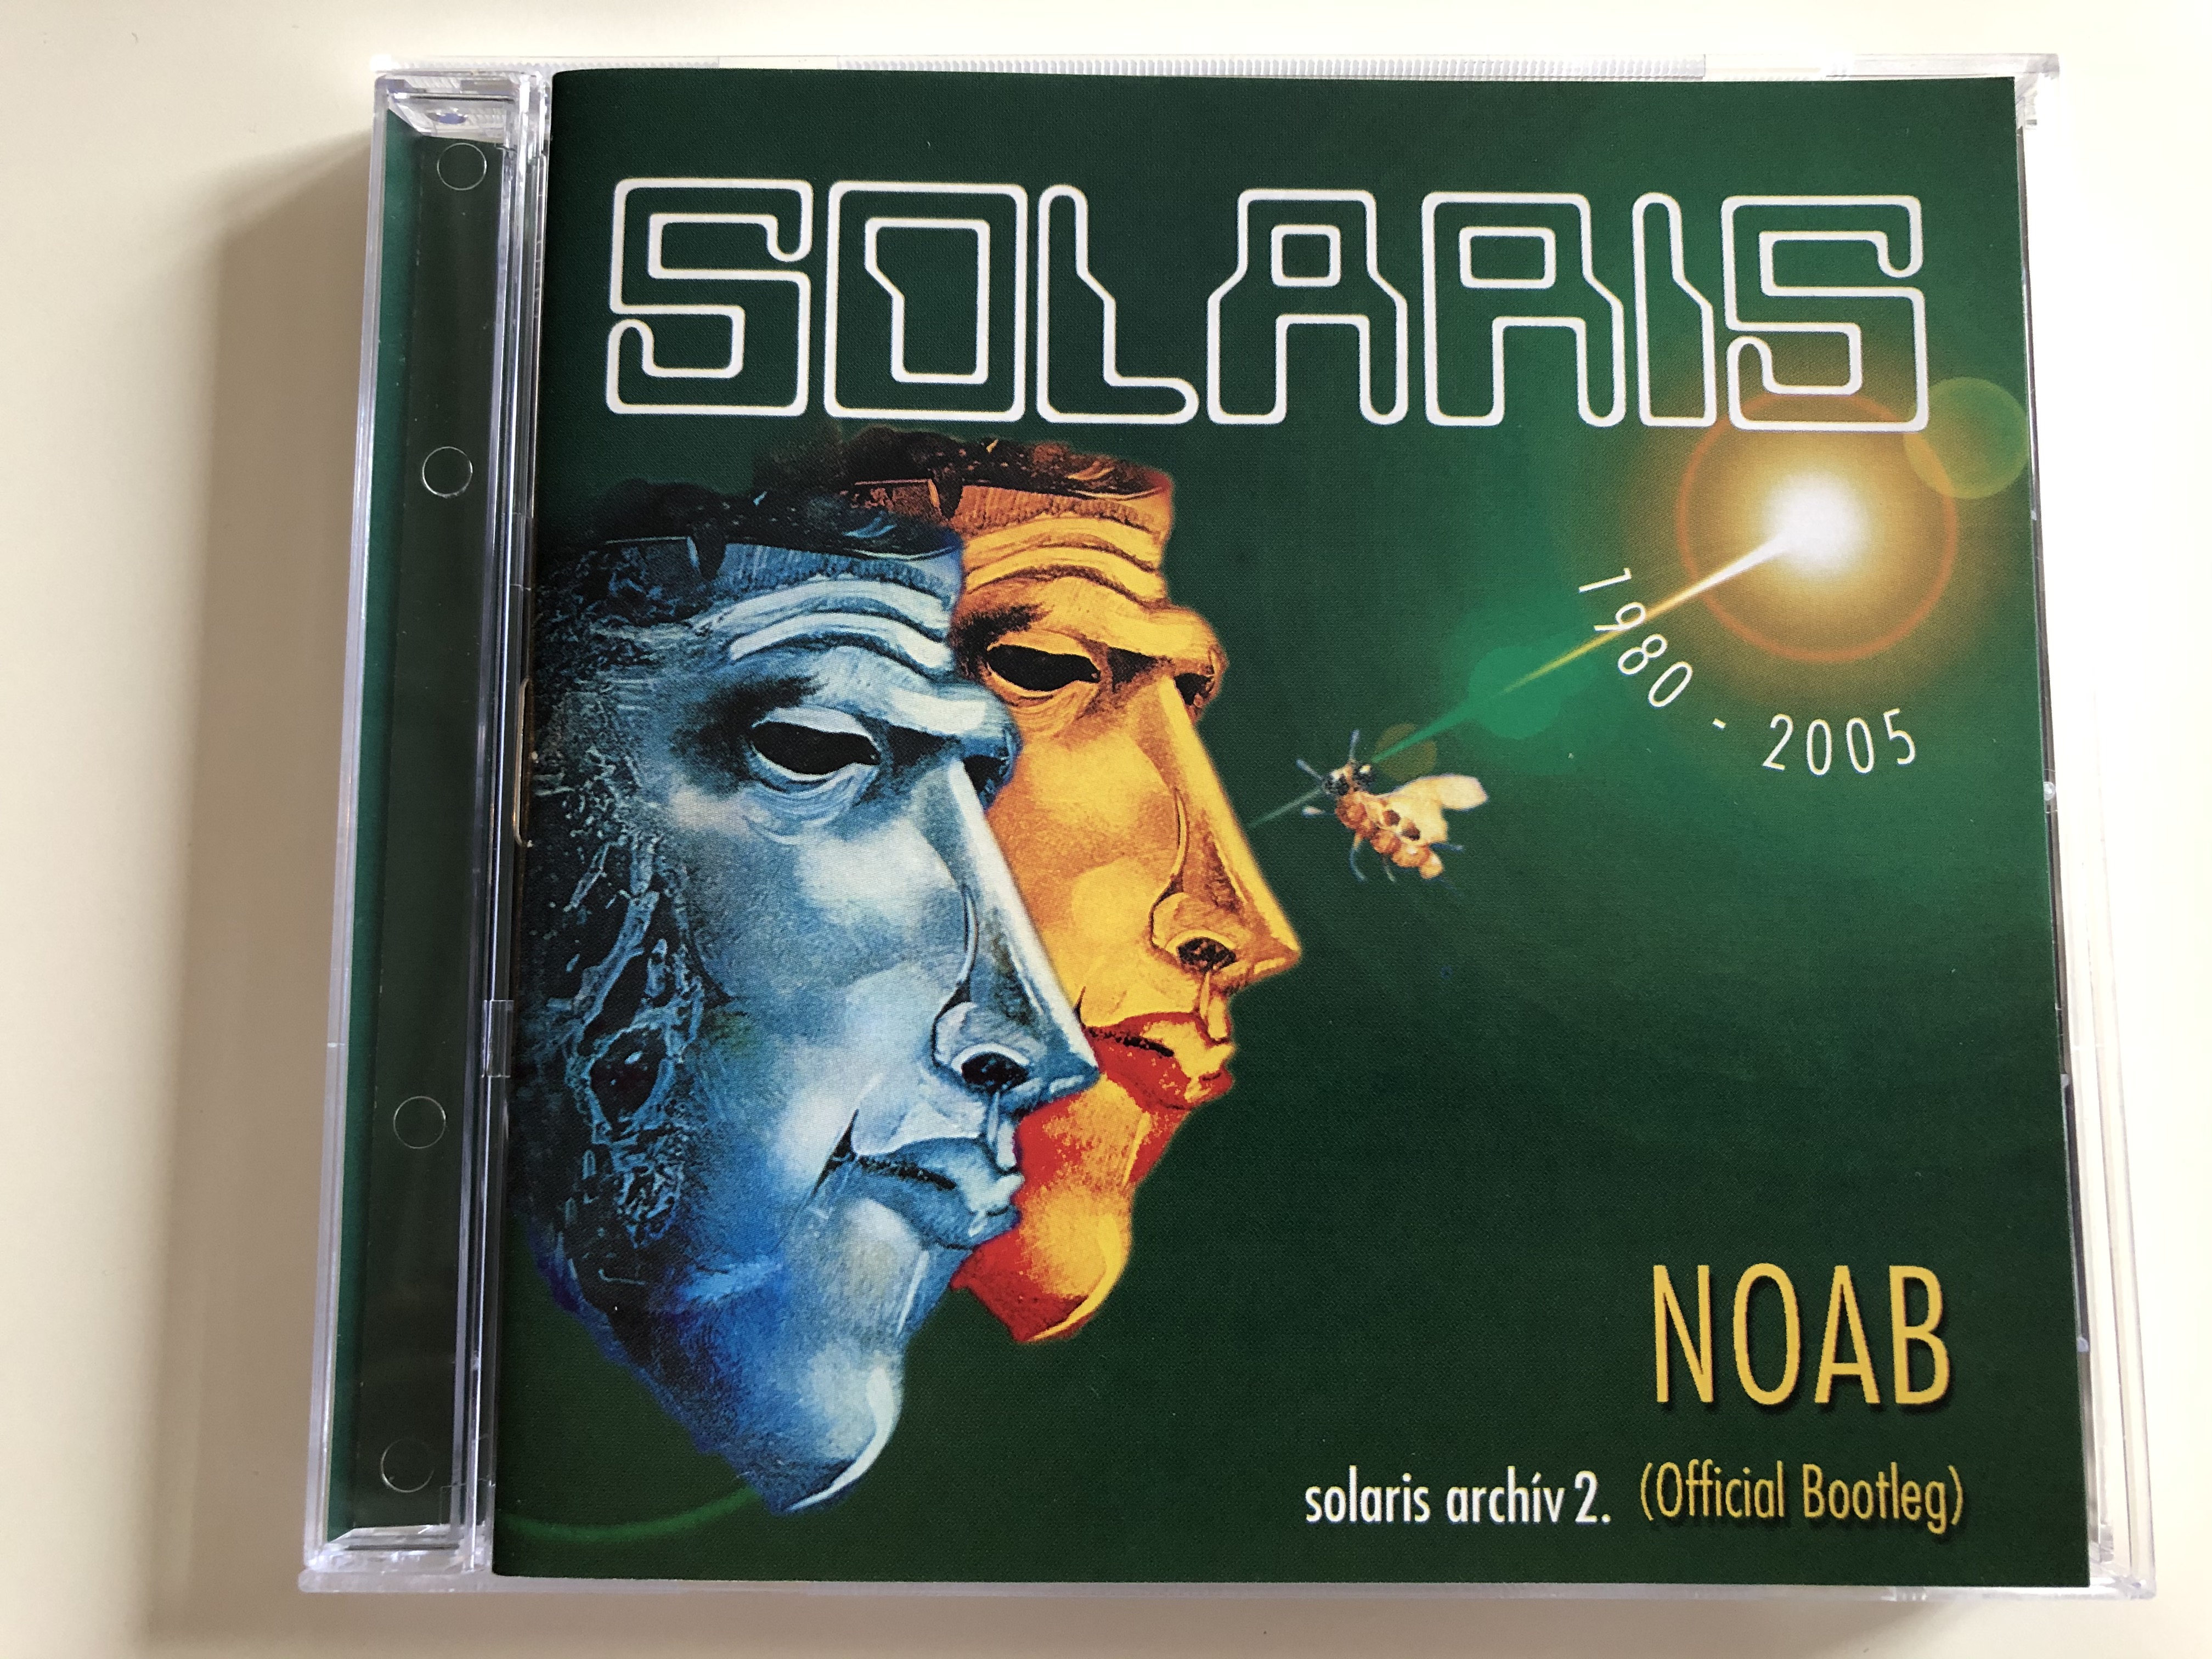 solaris-1980-2005-noab-solaris-archiv-2.-offical-bootleg-audio-cd-2005-smp020-1-.jpg